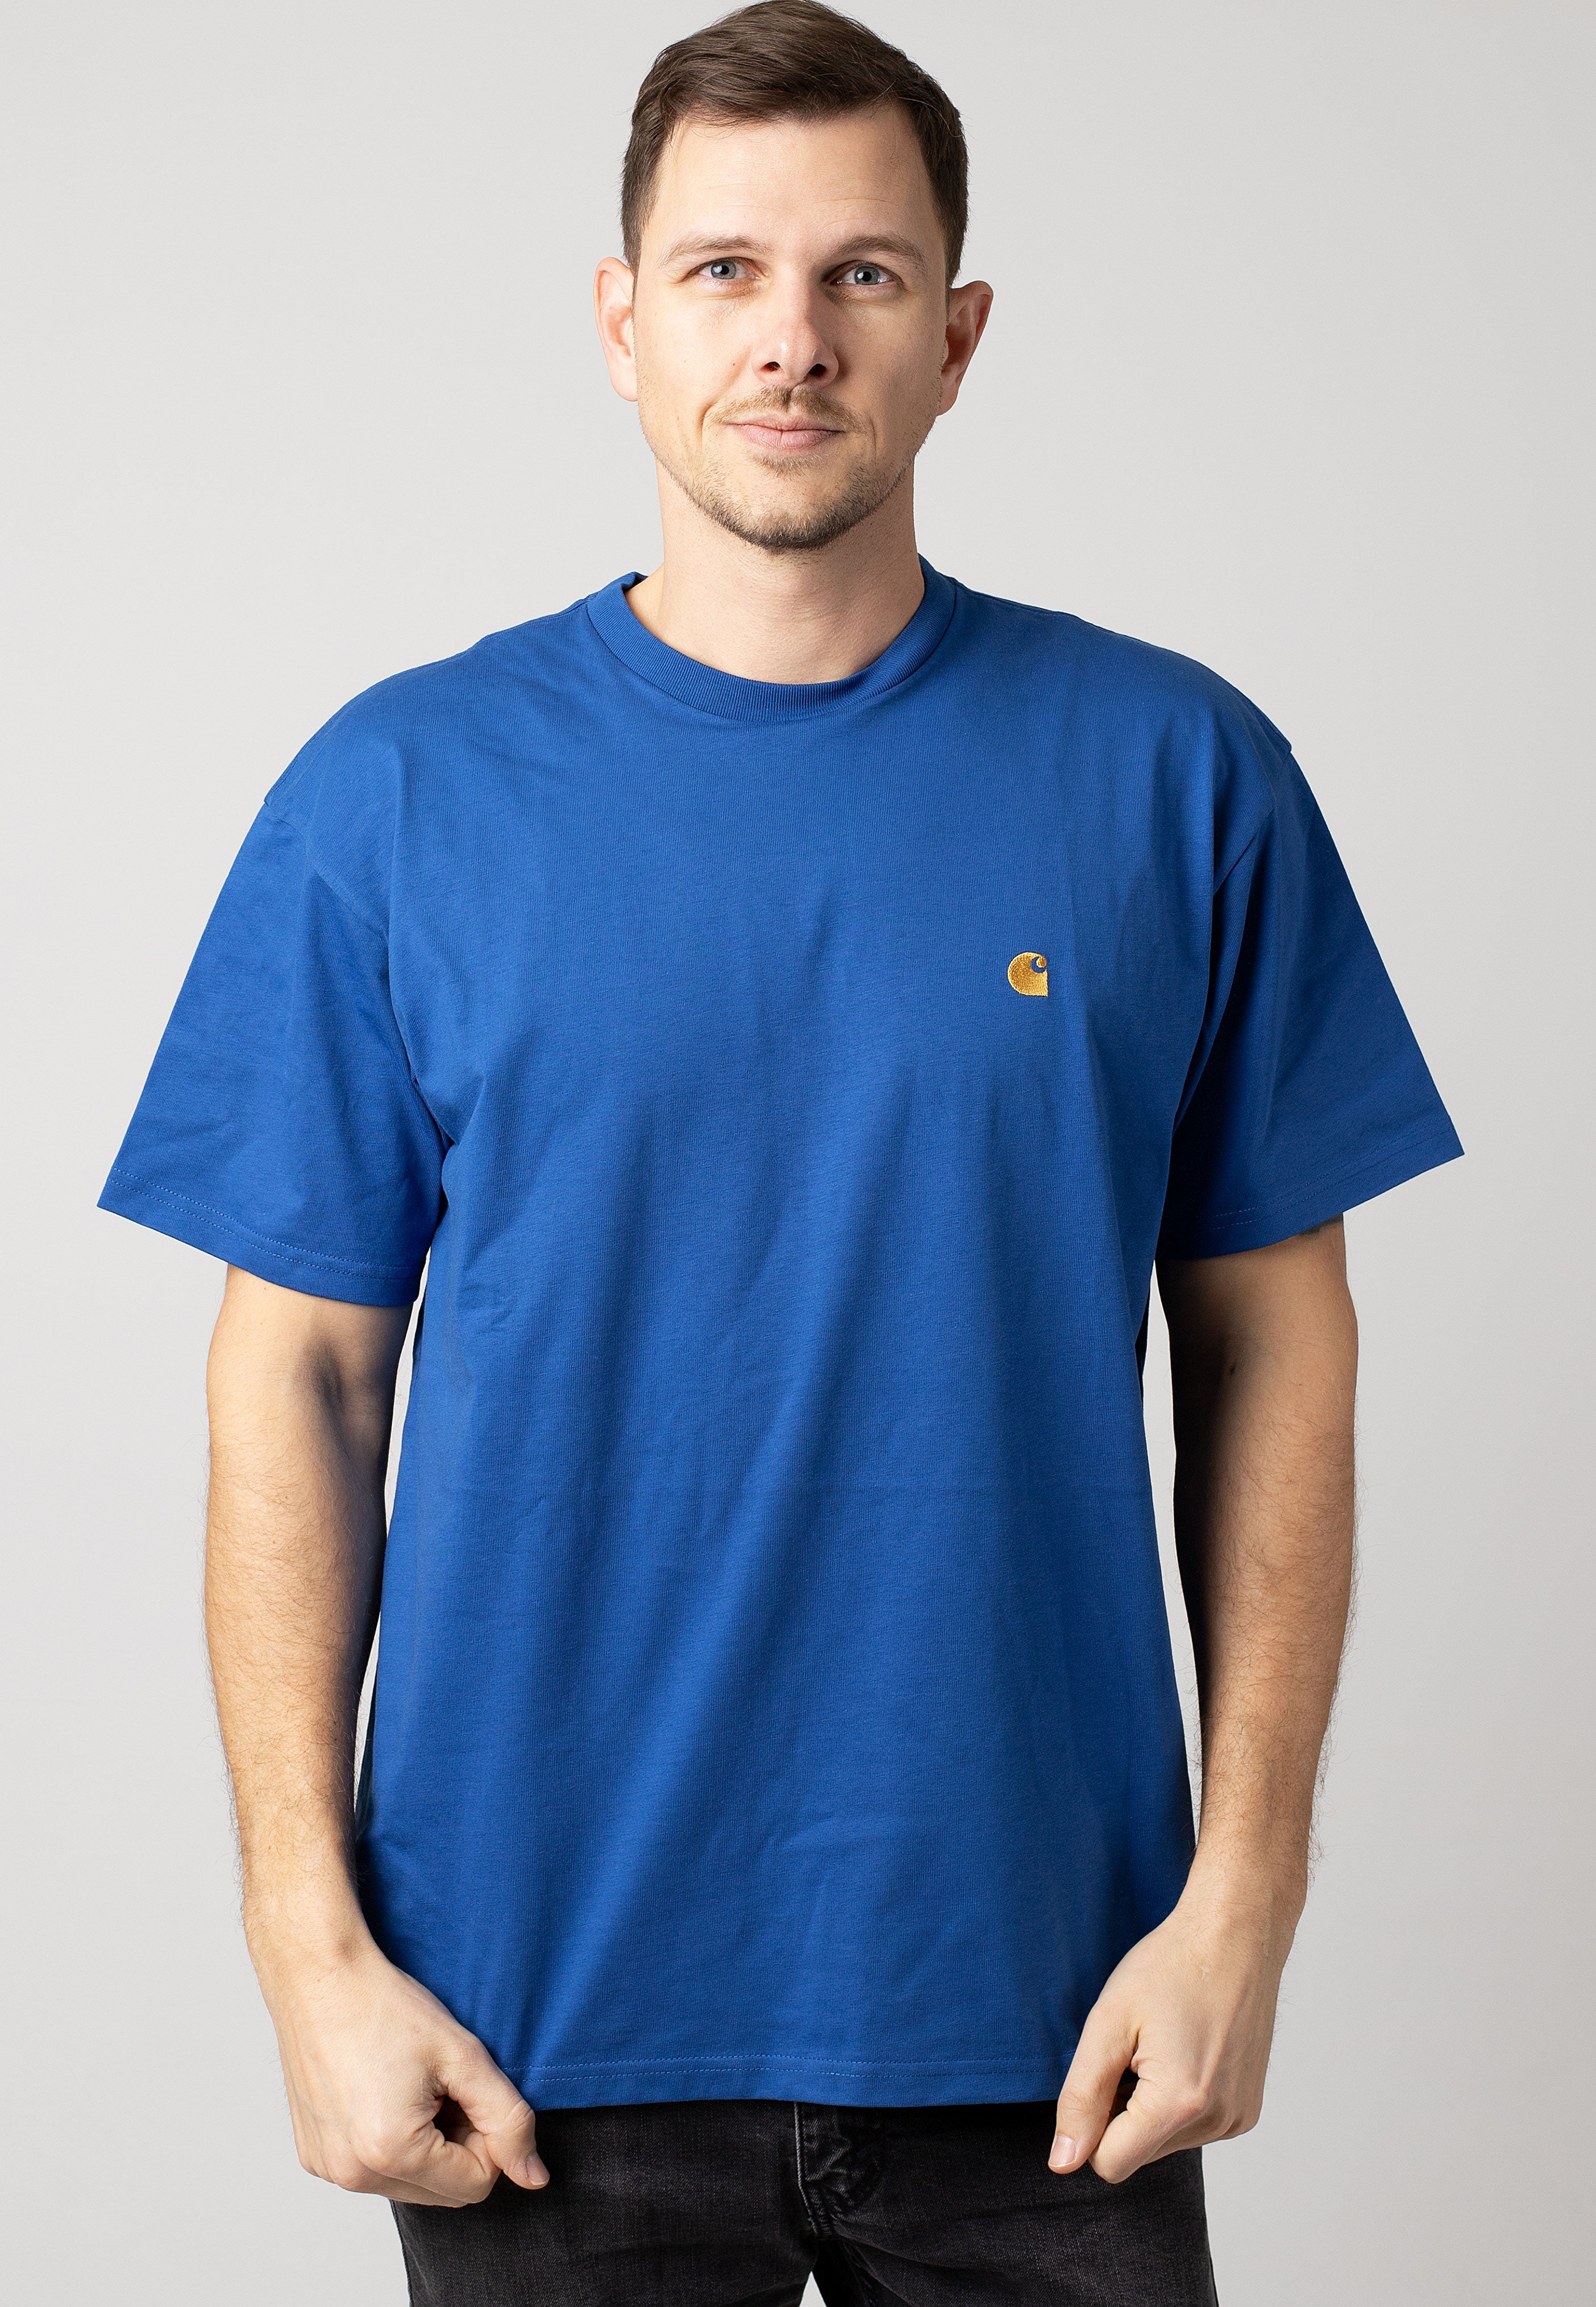 Carhartt WIP - Chase Acapulco/Gold - T-Shirt | Men-Image